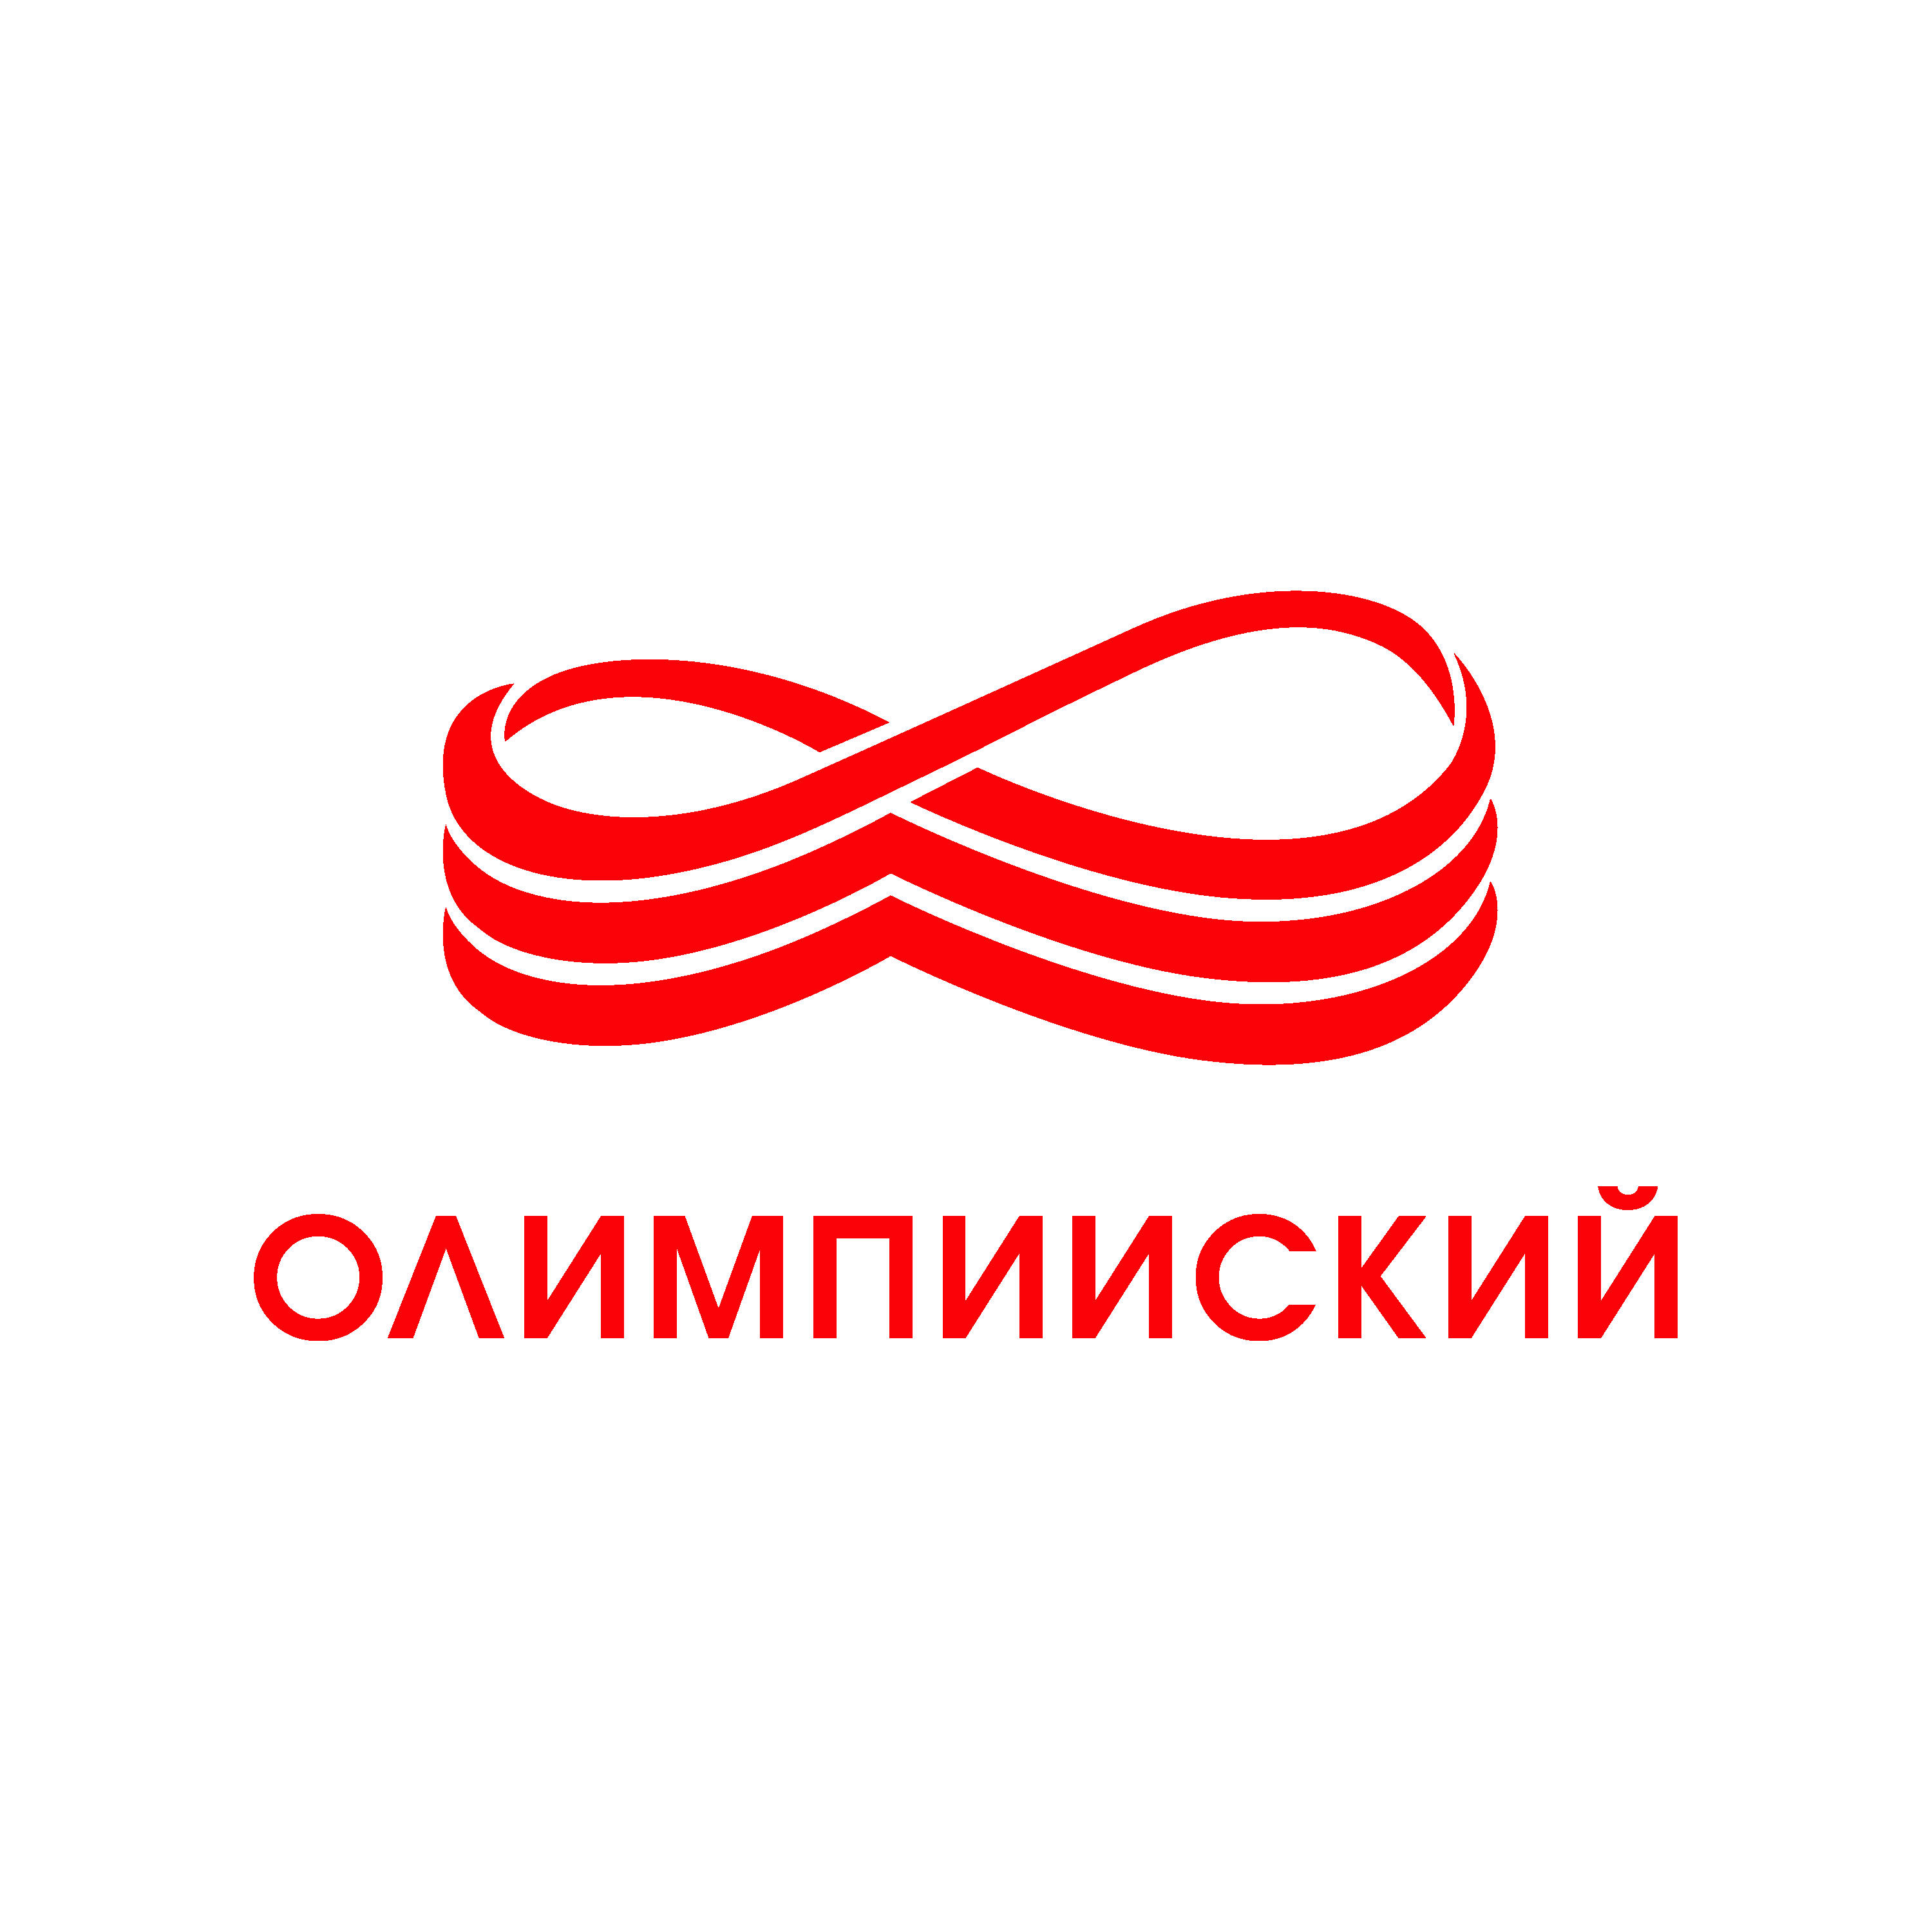 Olimpiyskiy Logo  Transparent Gallery